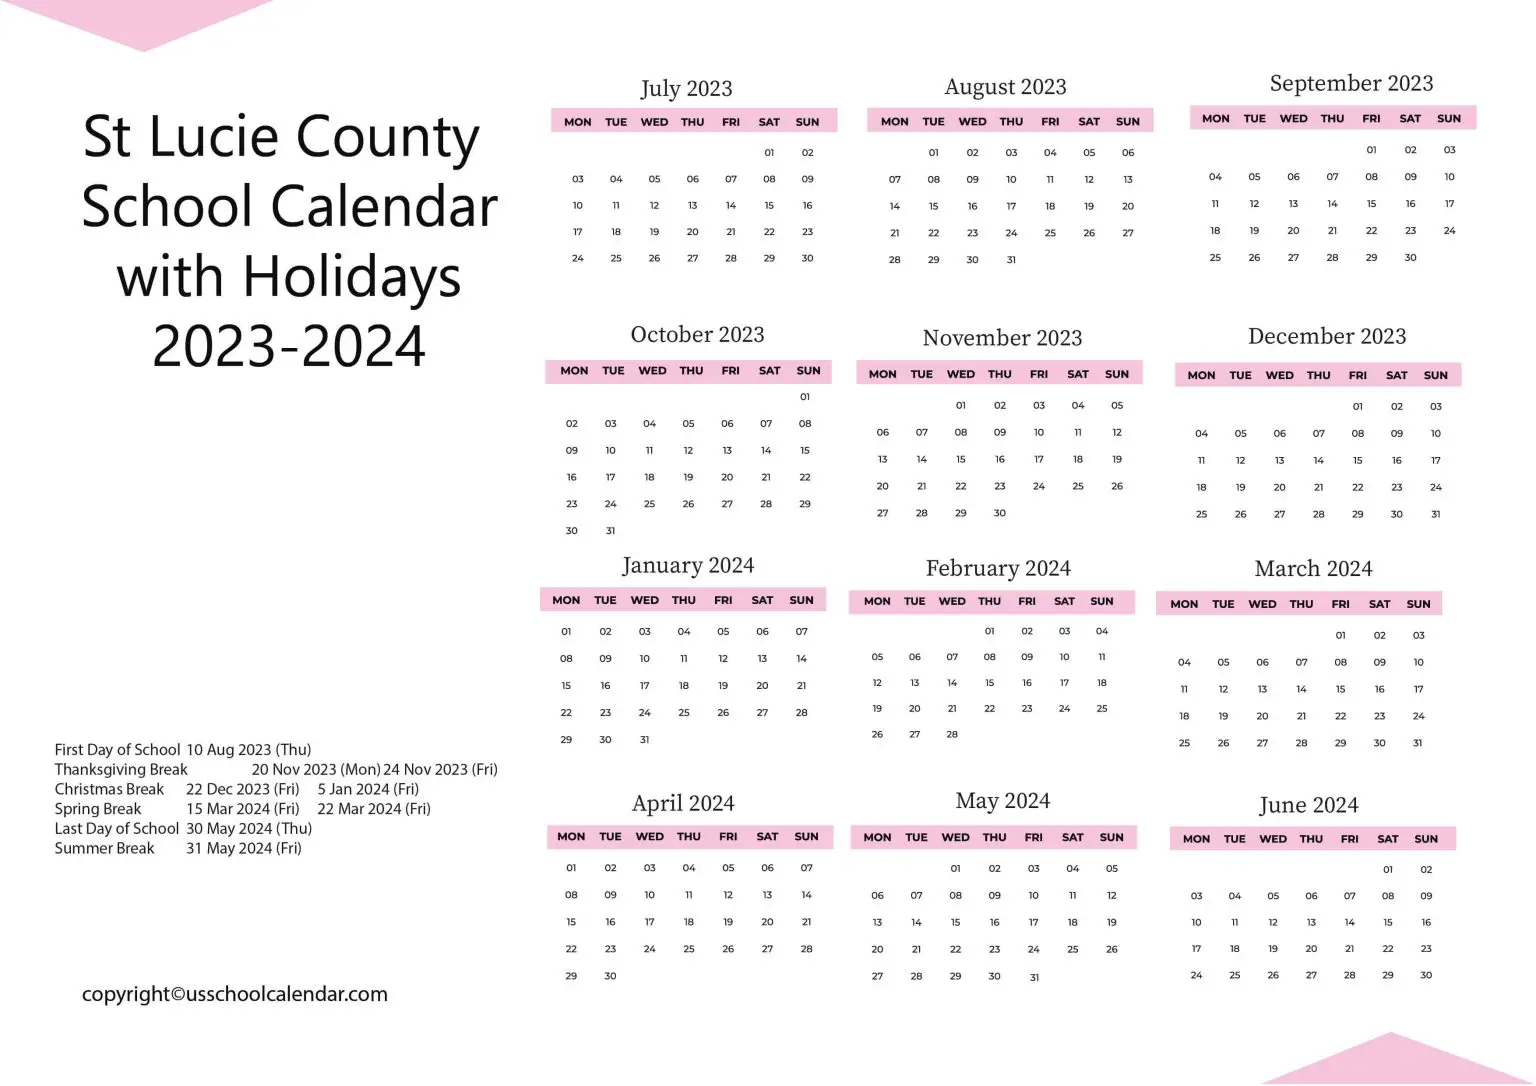 st-lucie-county-school-calendar-with-holidays-2023-2024